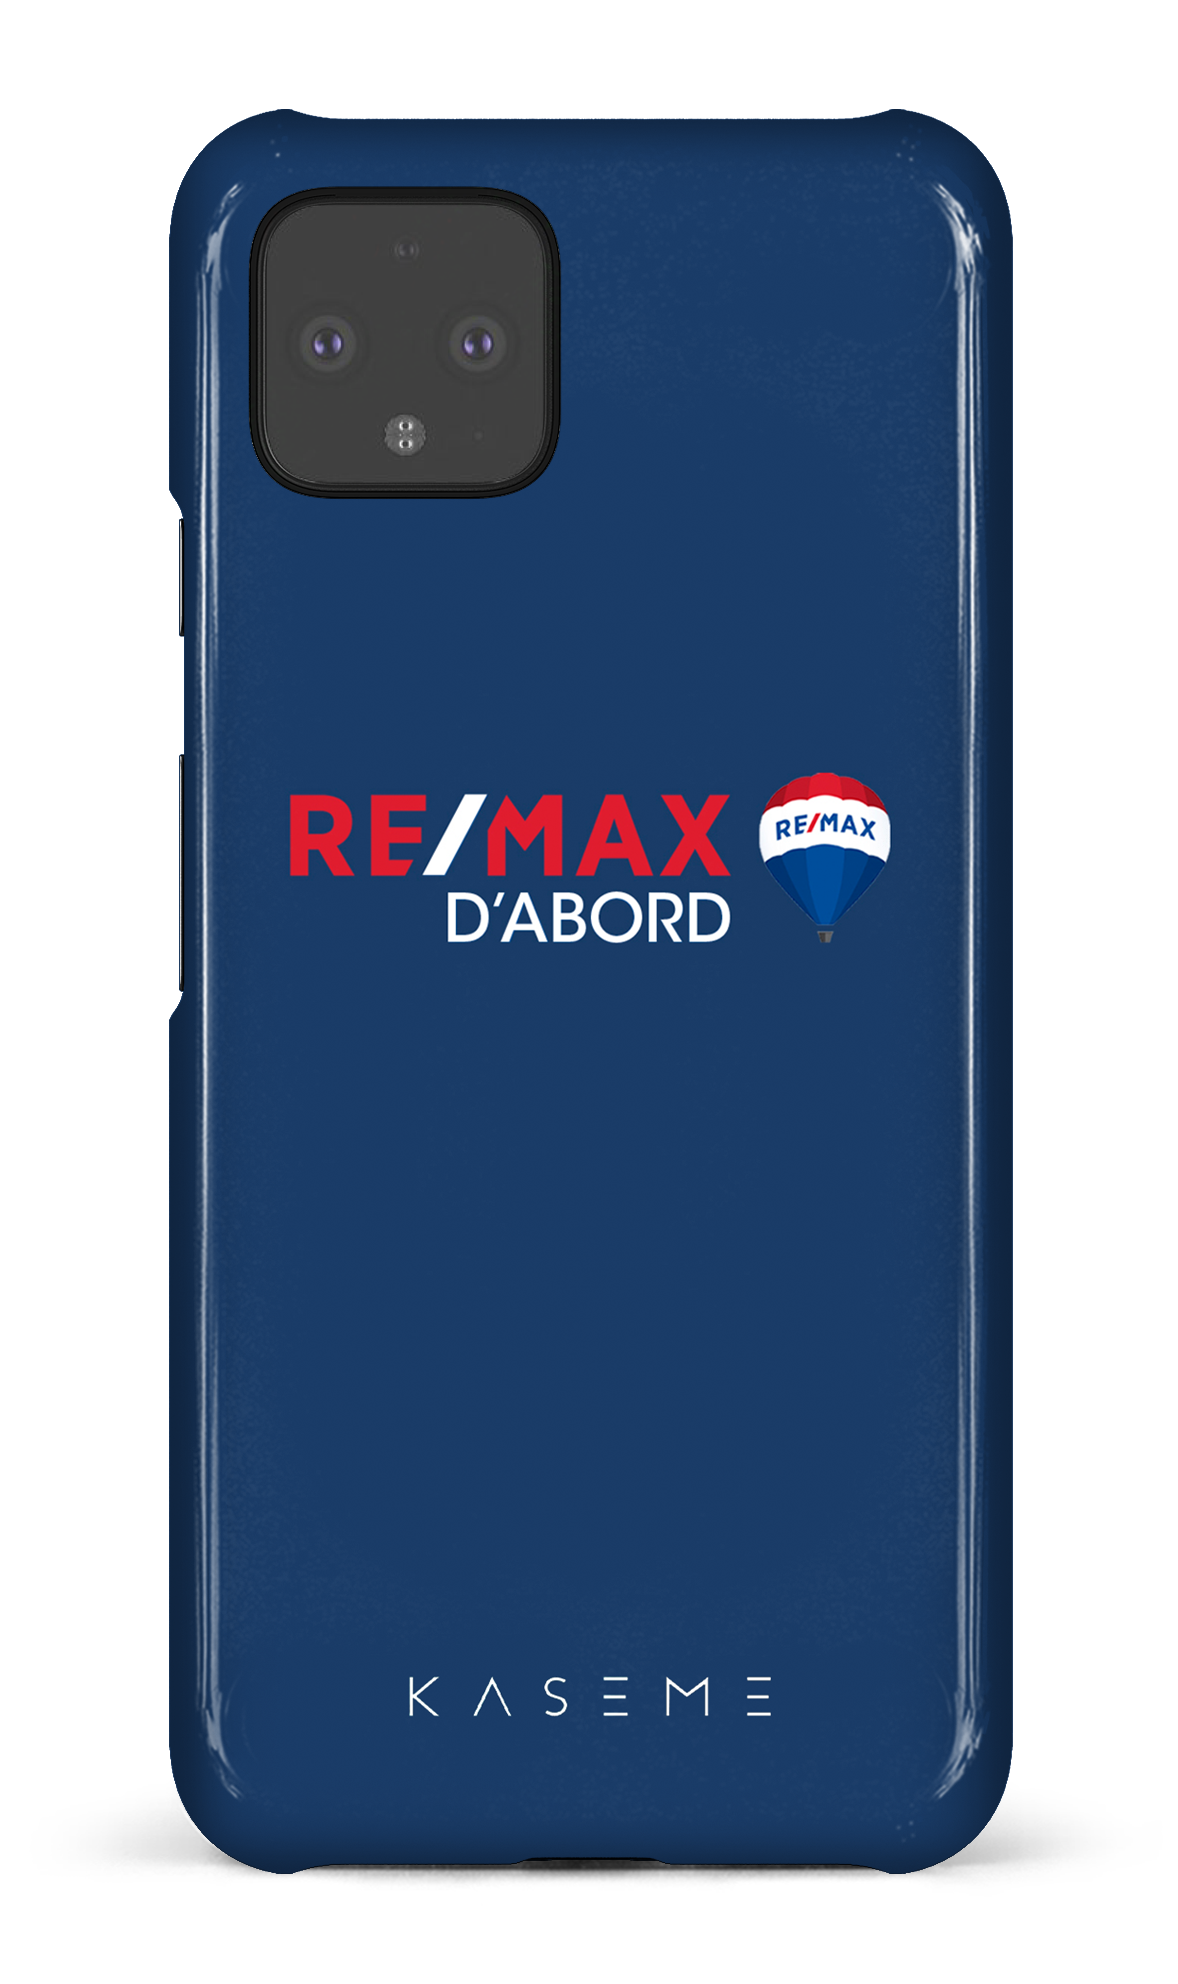 Remax D'abord Bleu - Google Pixel 4